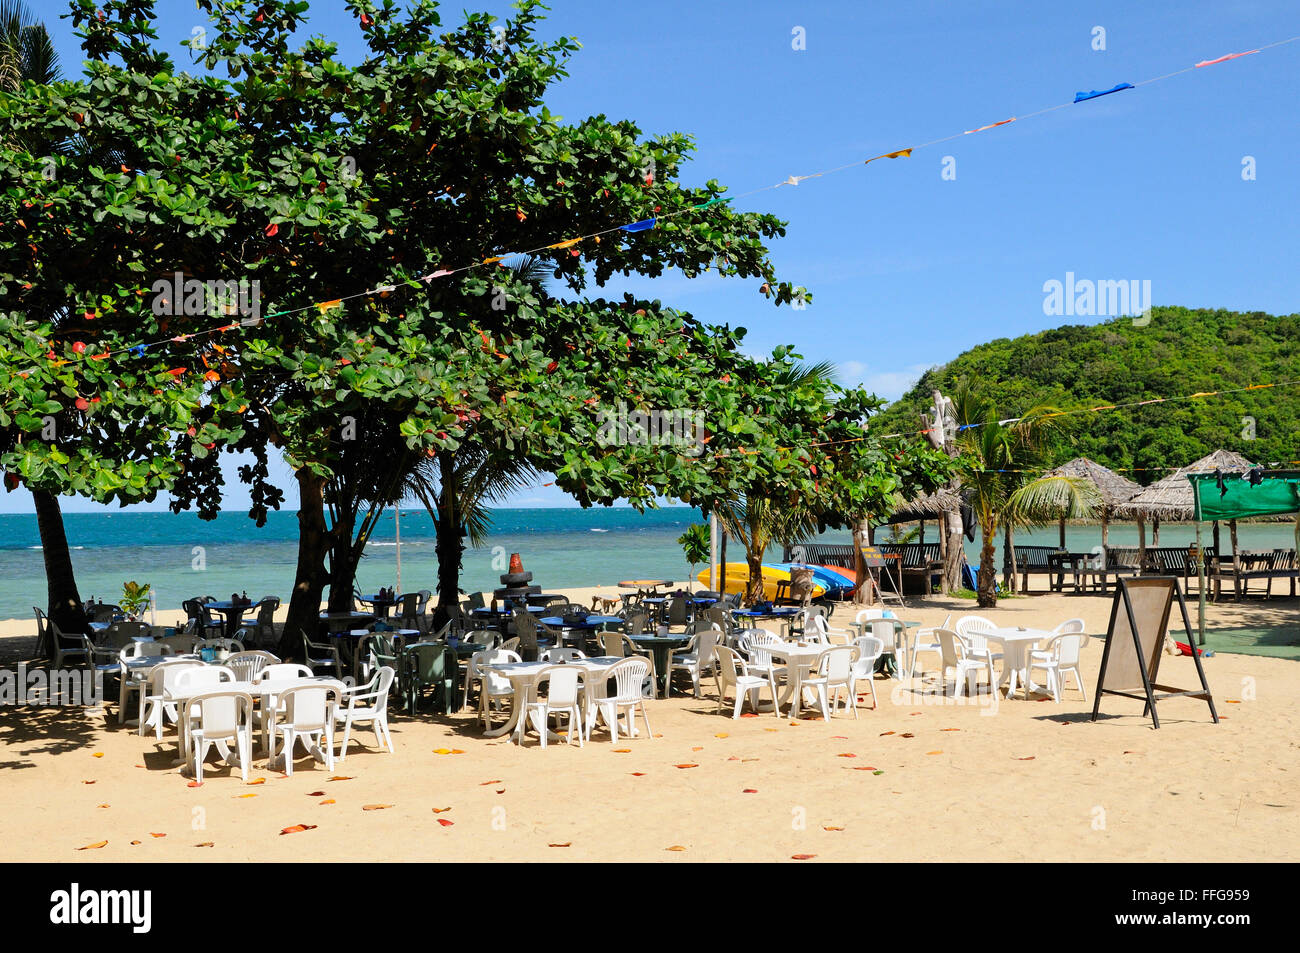 Mae haad beach, koh phangan, Thailand Stock Photo